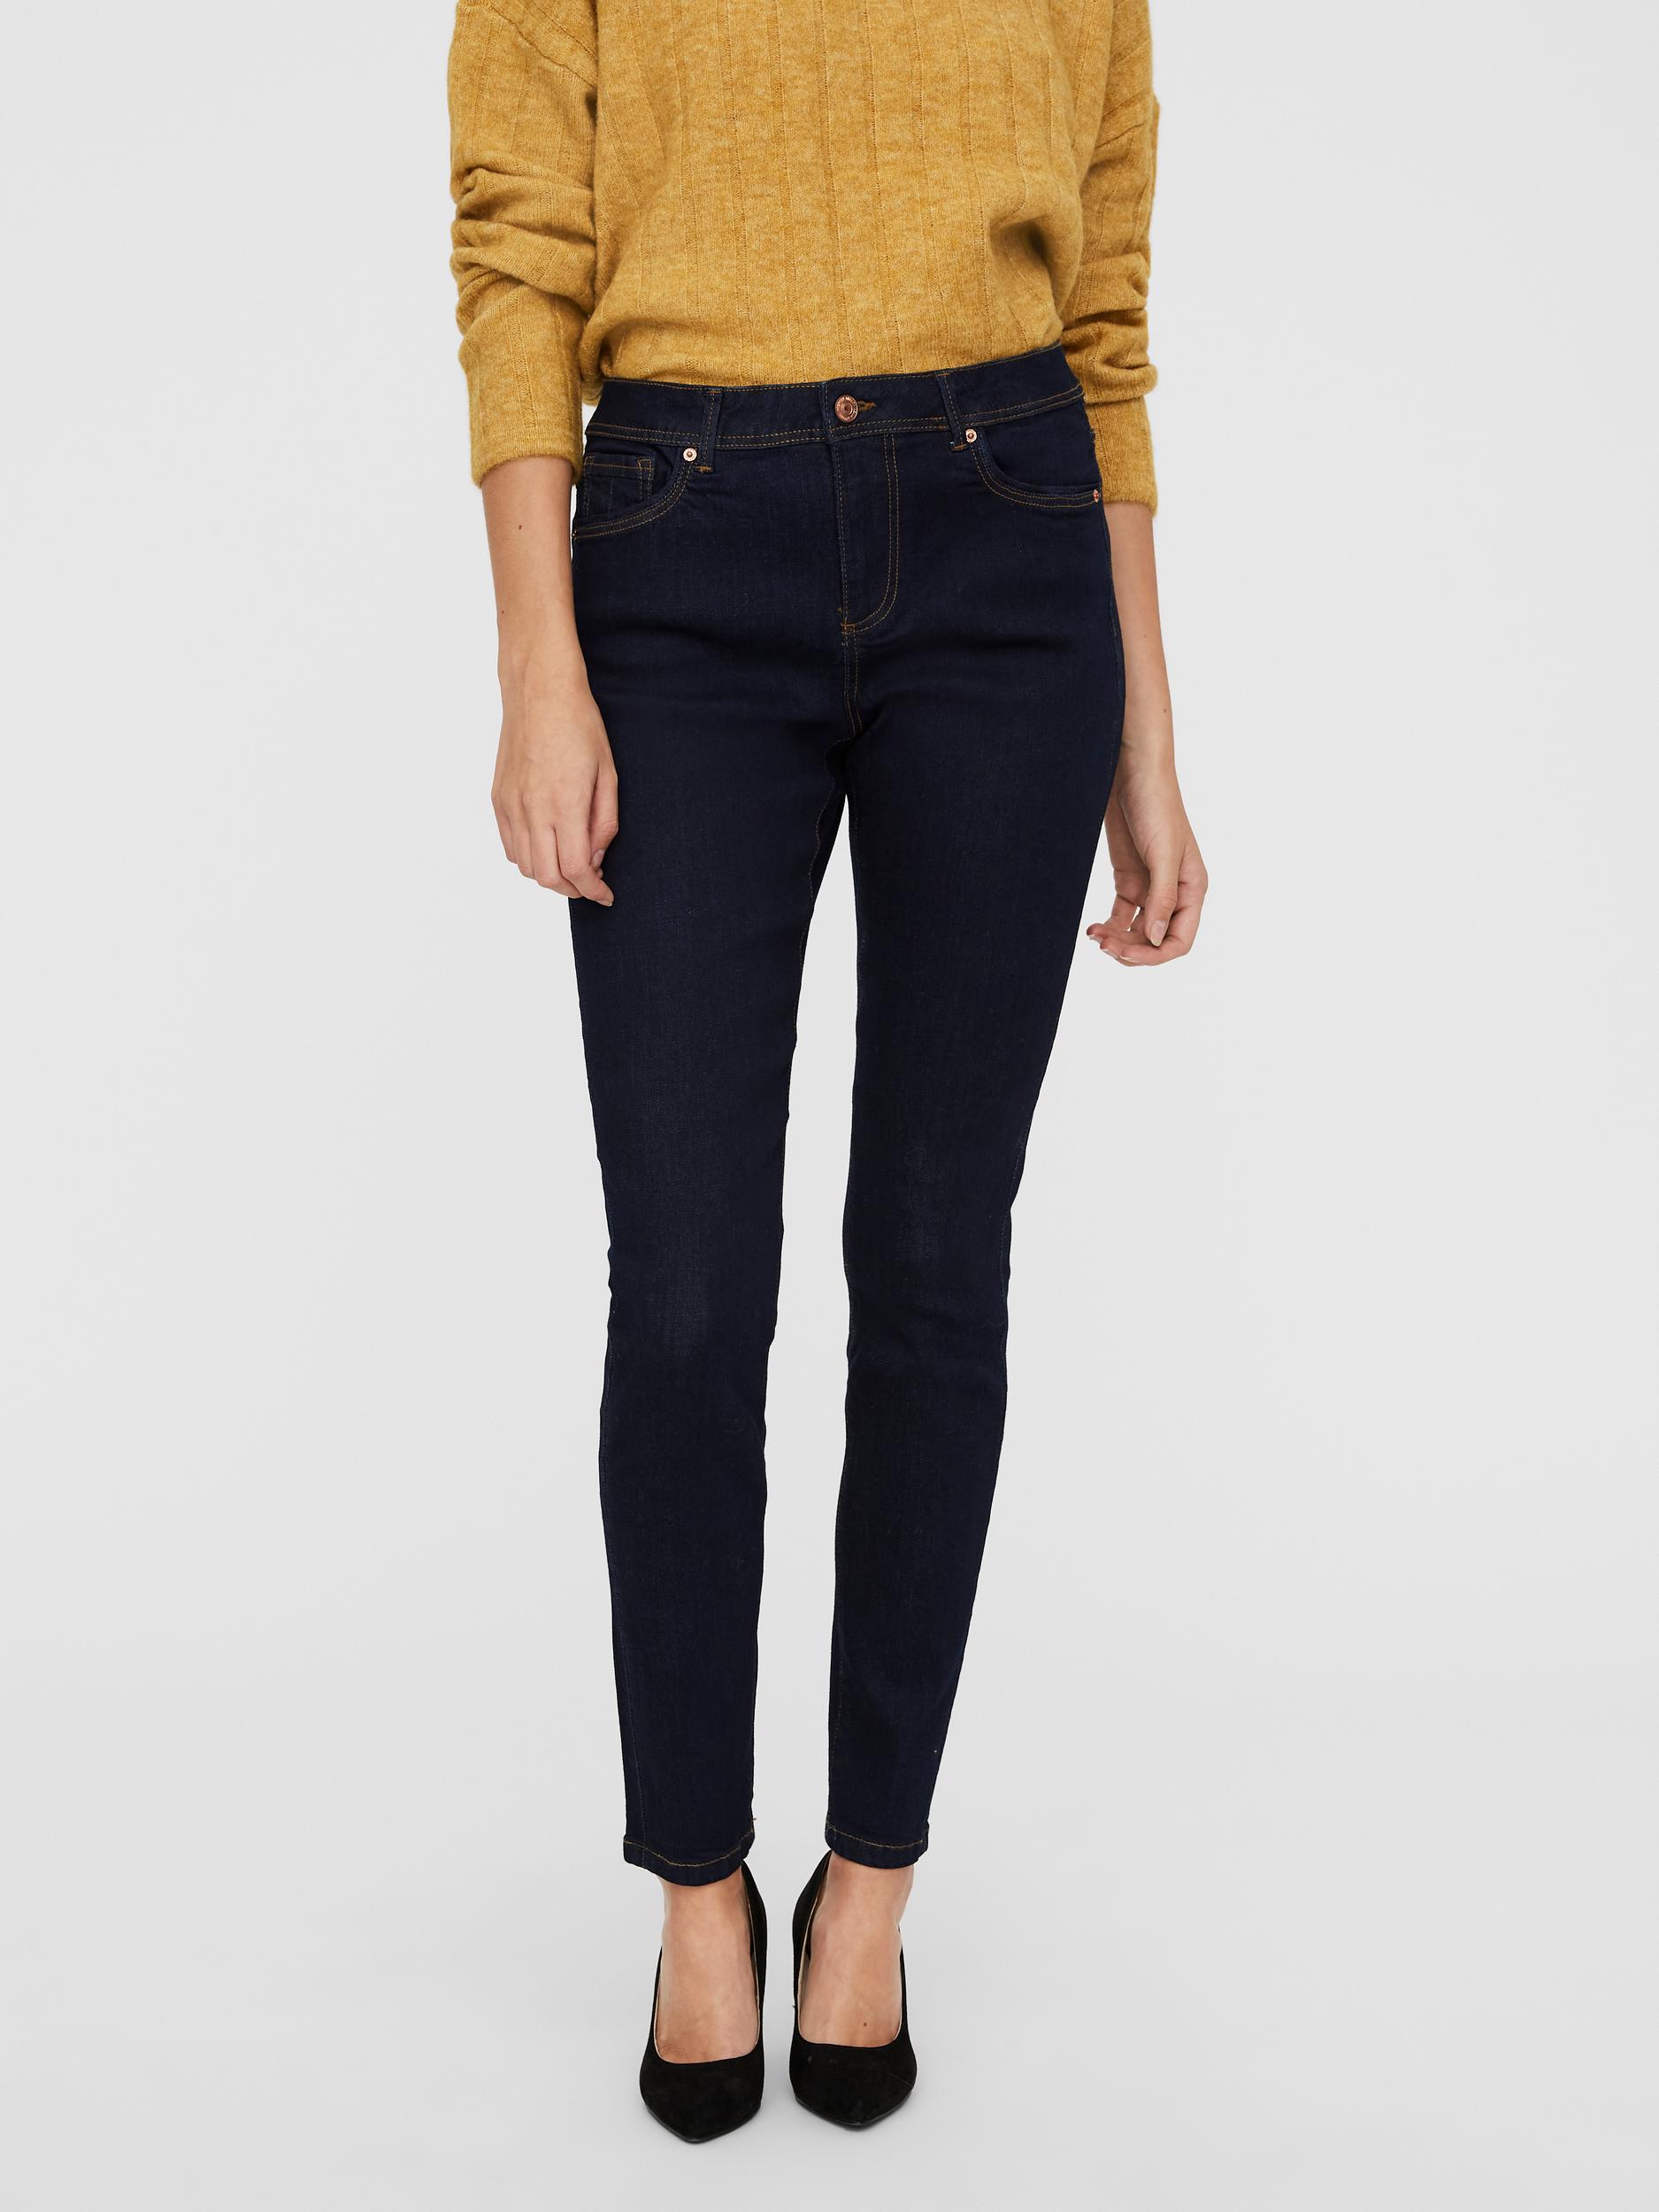 FINAL SALE - Tanya mid waist skinny fit jeans